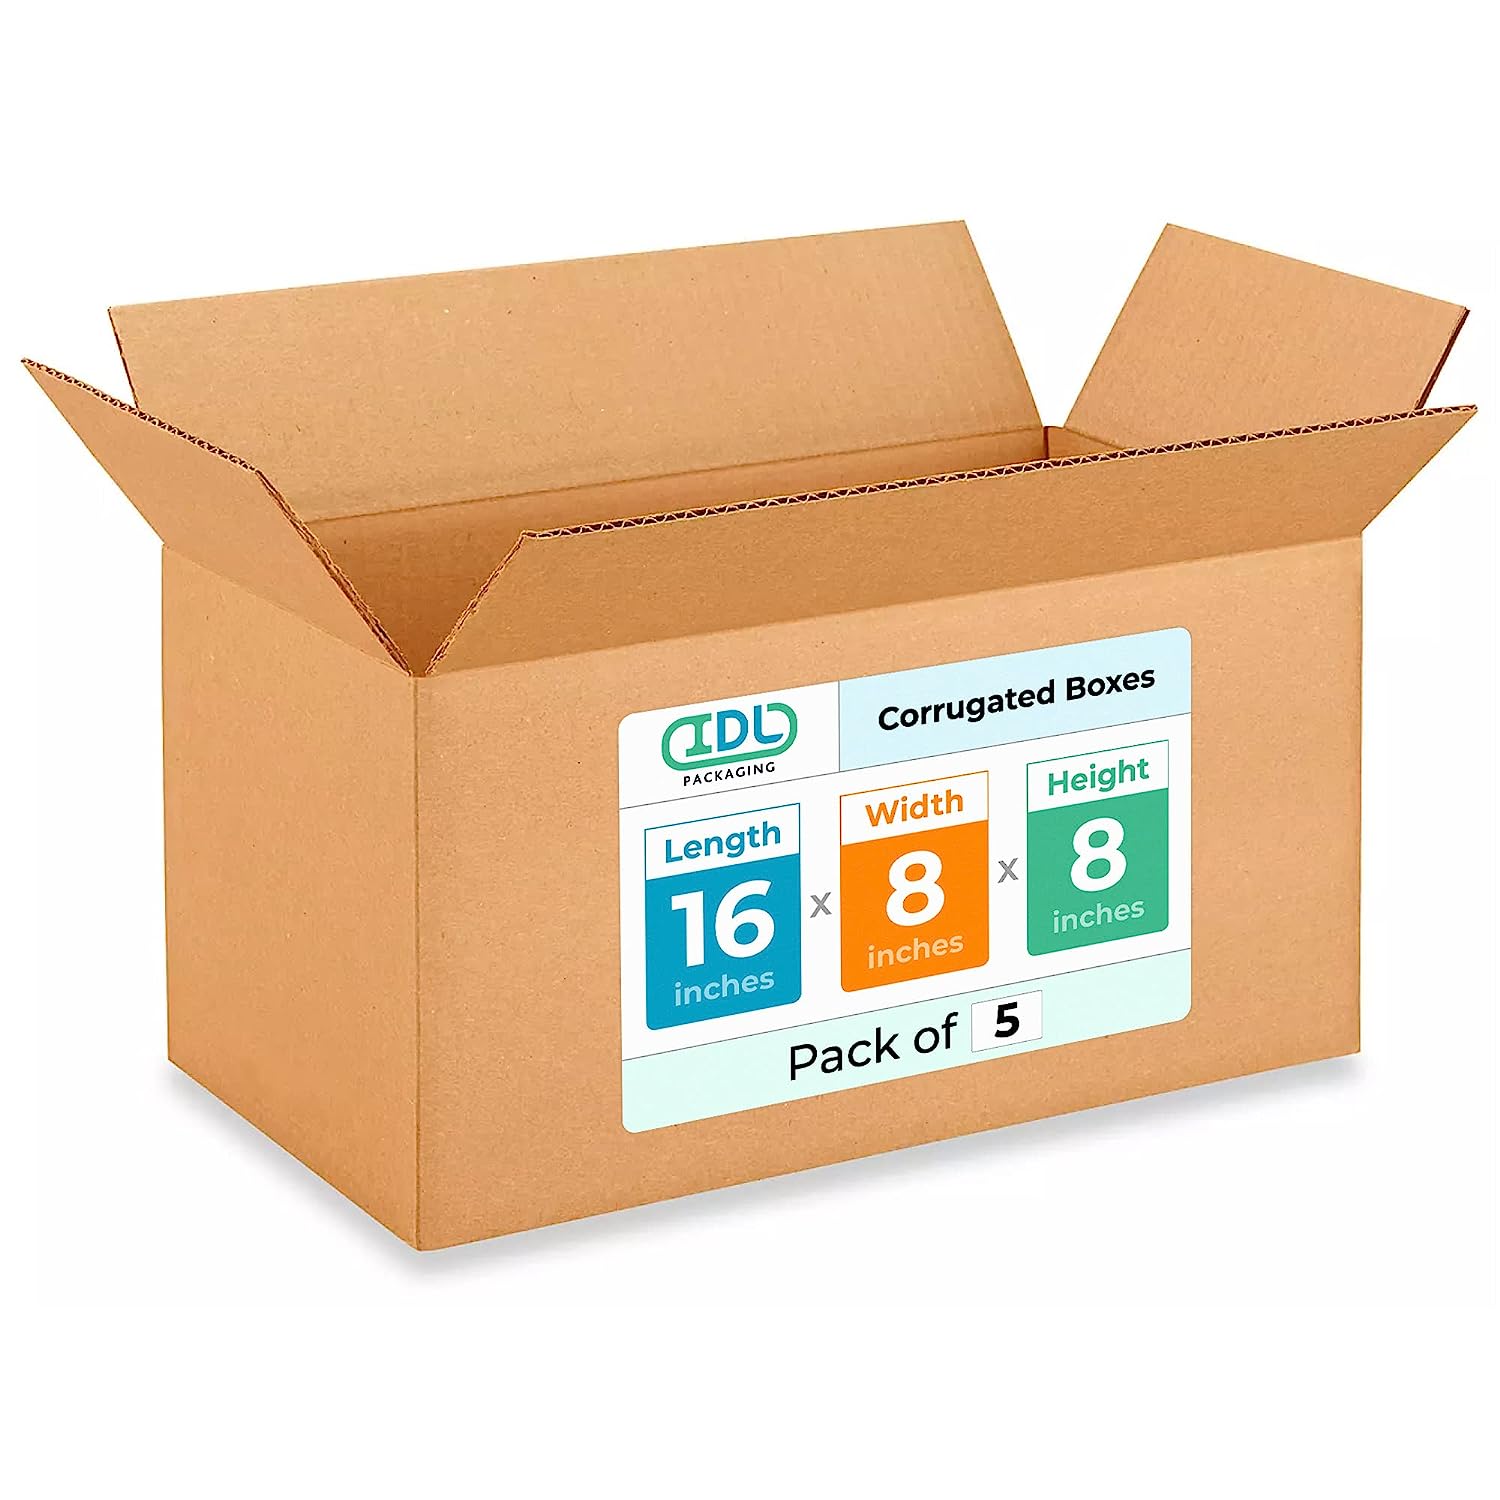 IDL Packaging Medium Corrugated Shipping Boxes 16